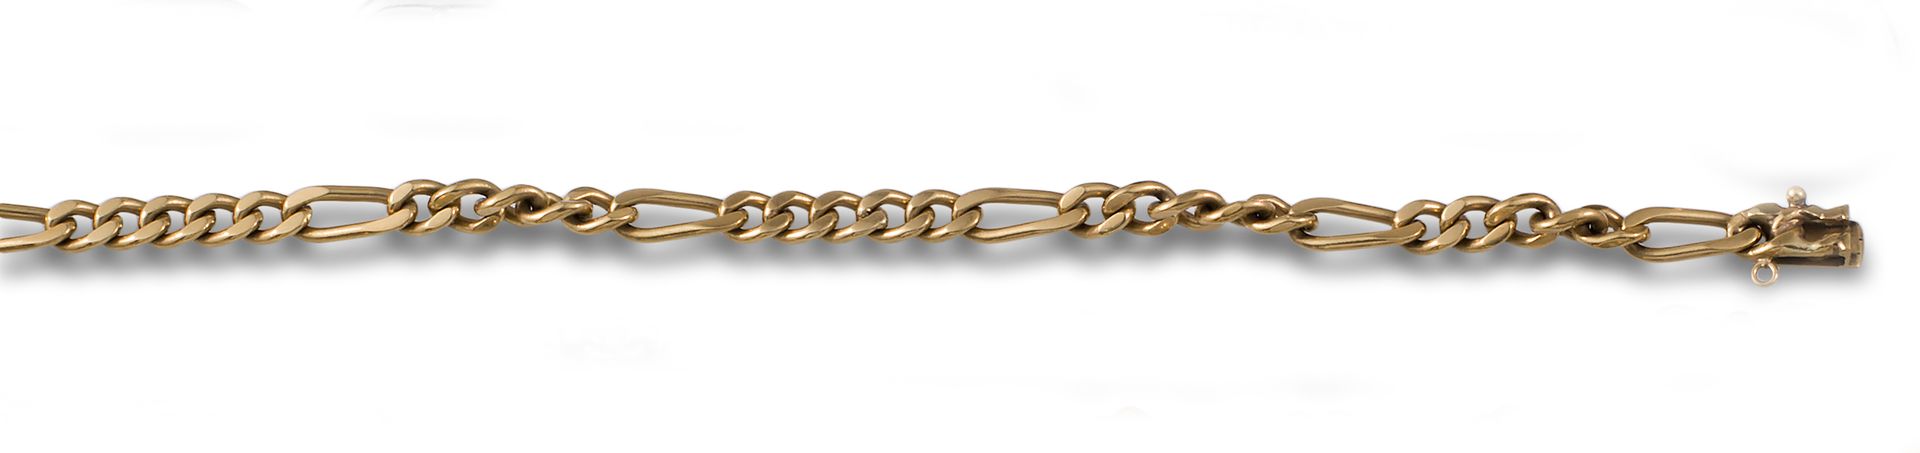 GOLD BRAIDED BRACELET 18kt yellow gold bearded bracelet. Weight: 15.96 gr. . .